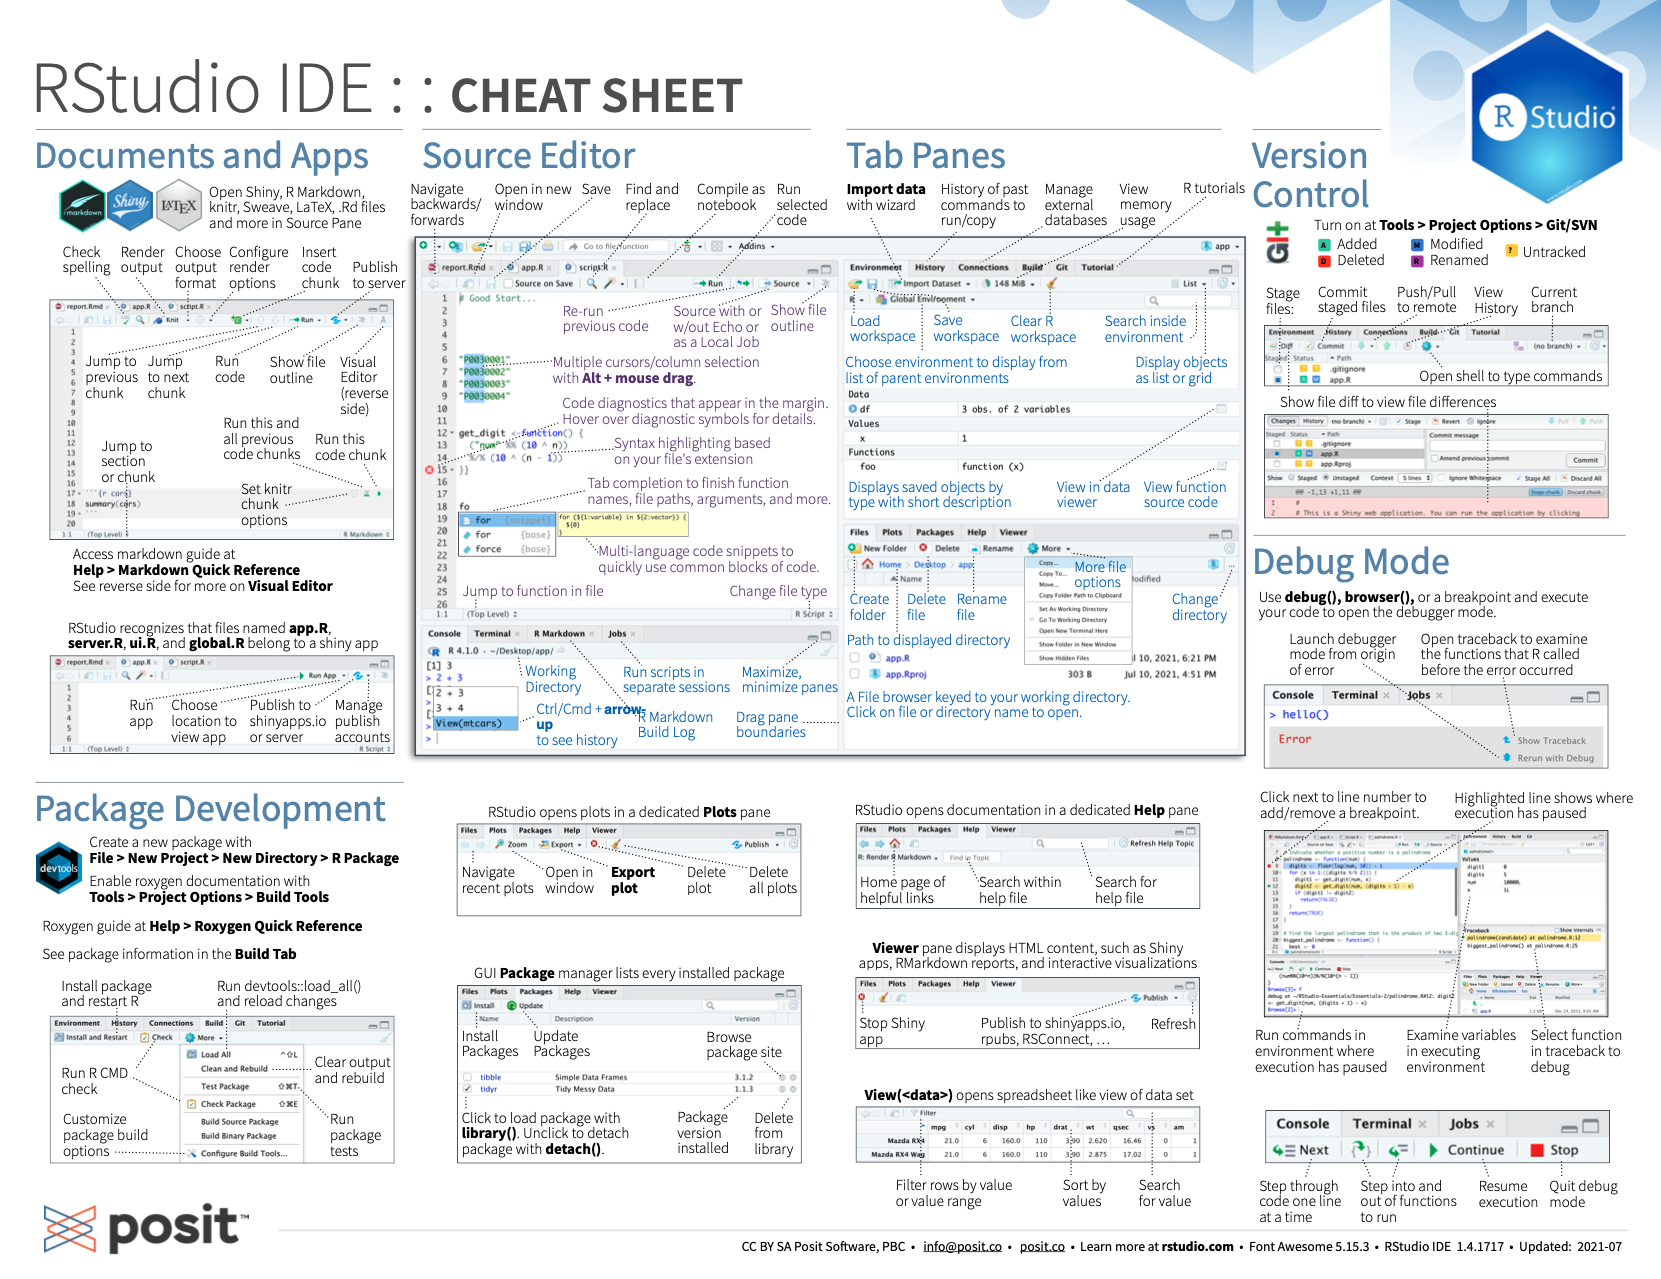 The RStudio IDE cheat sheet (from Posit cheatsheets).